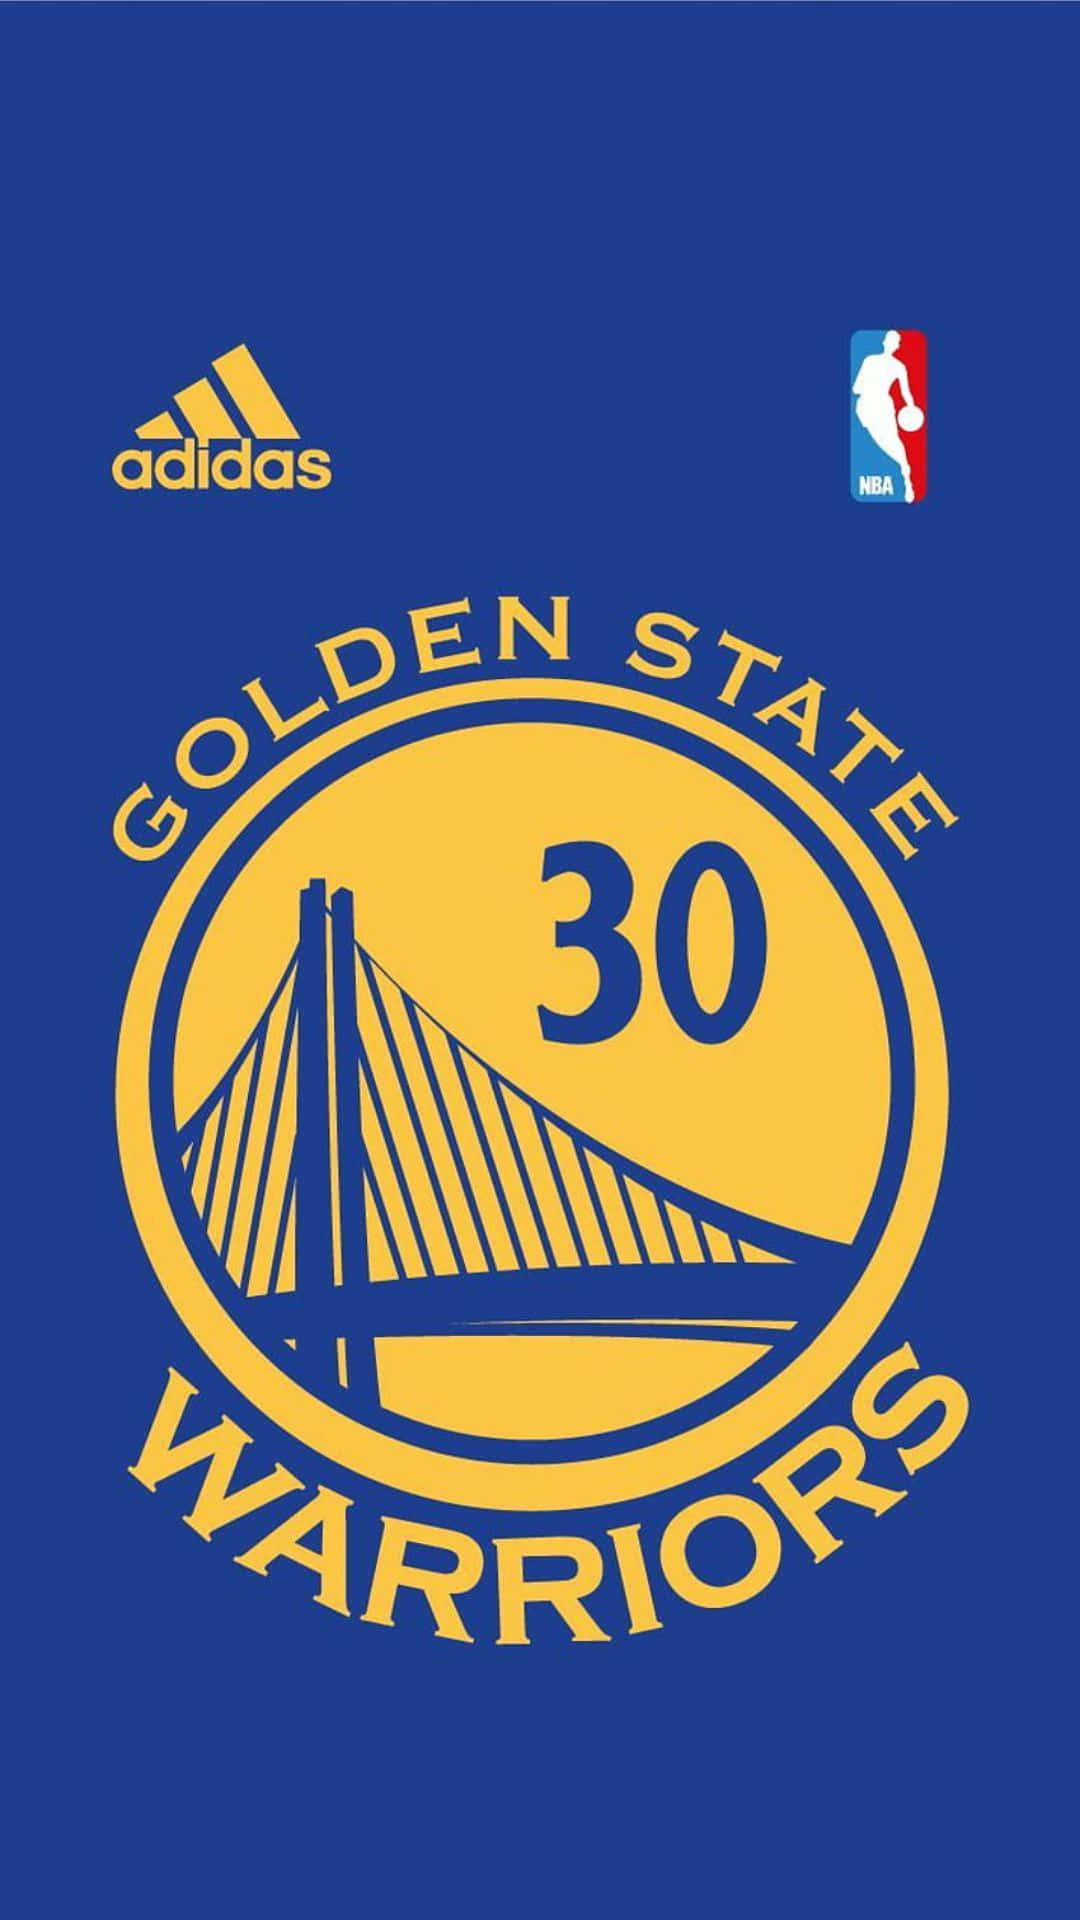 Golden State Warriors Jersey Number30 Wallpaper